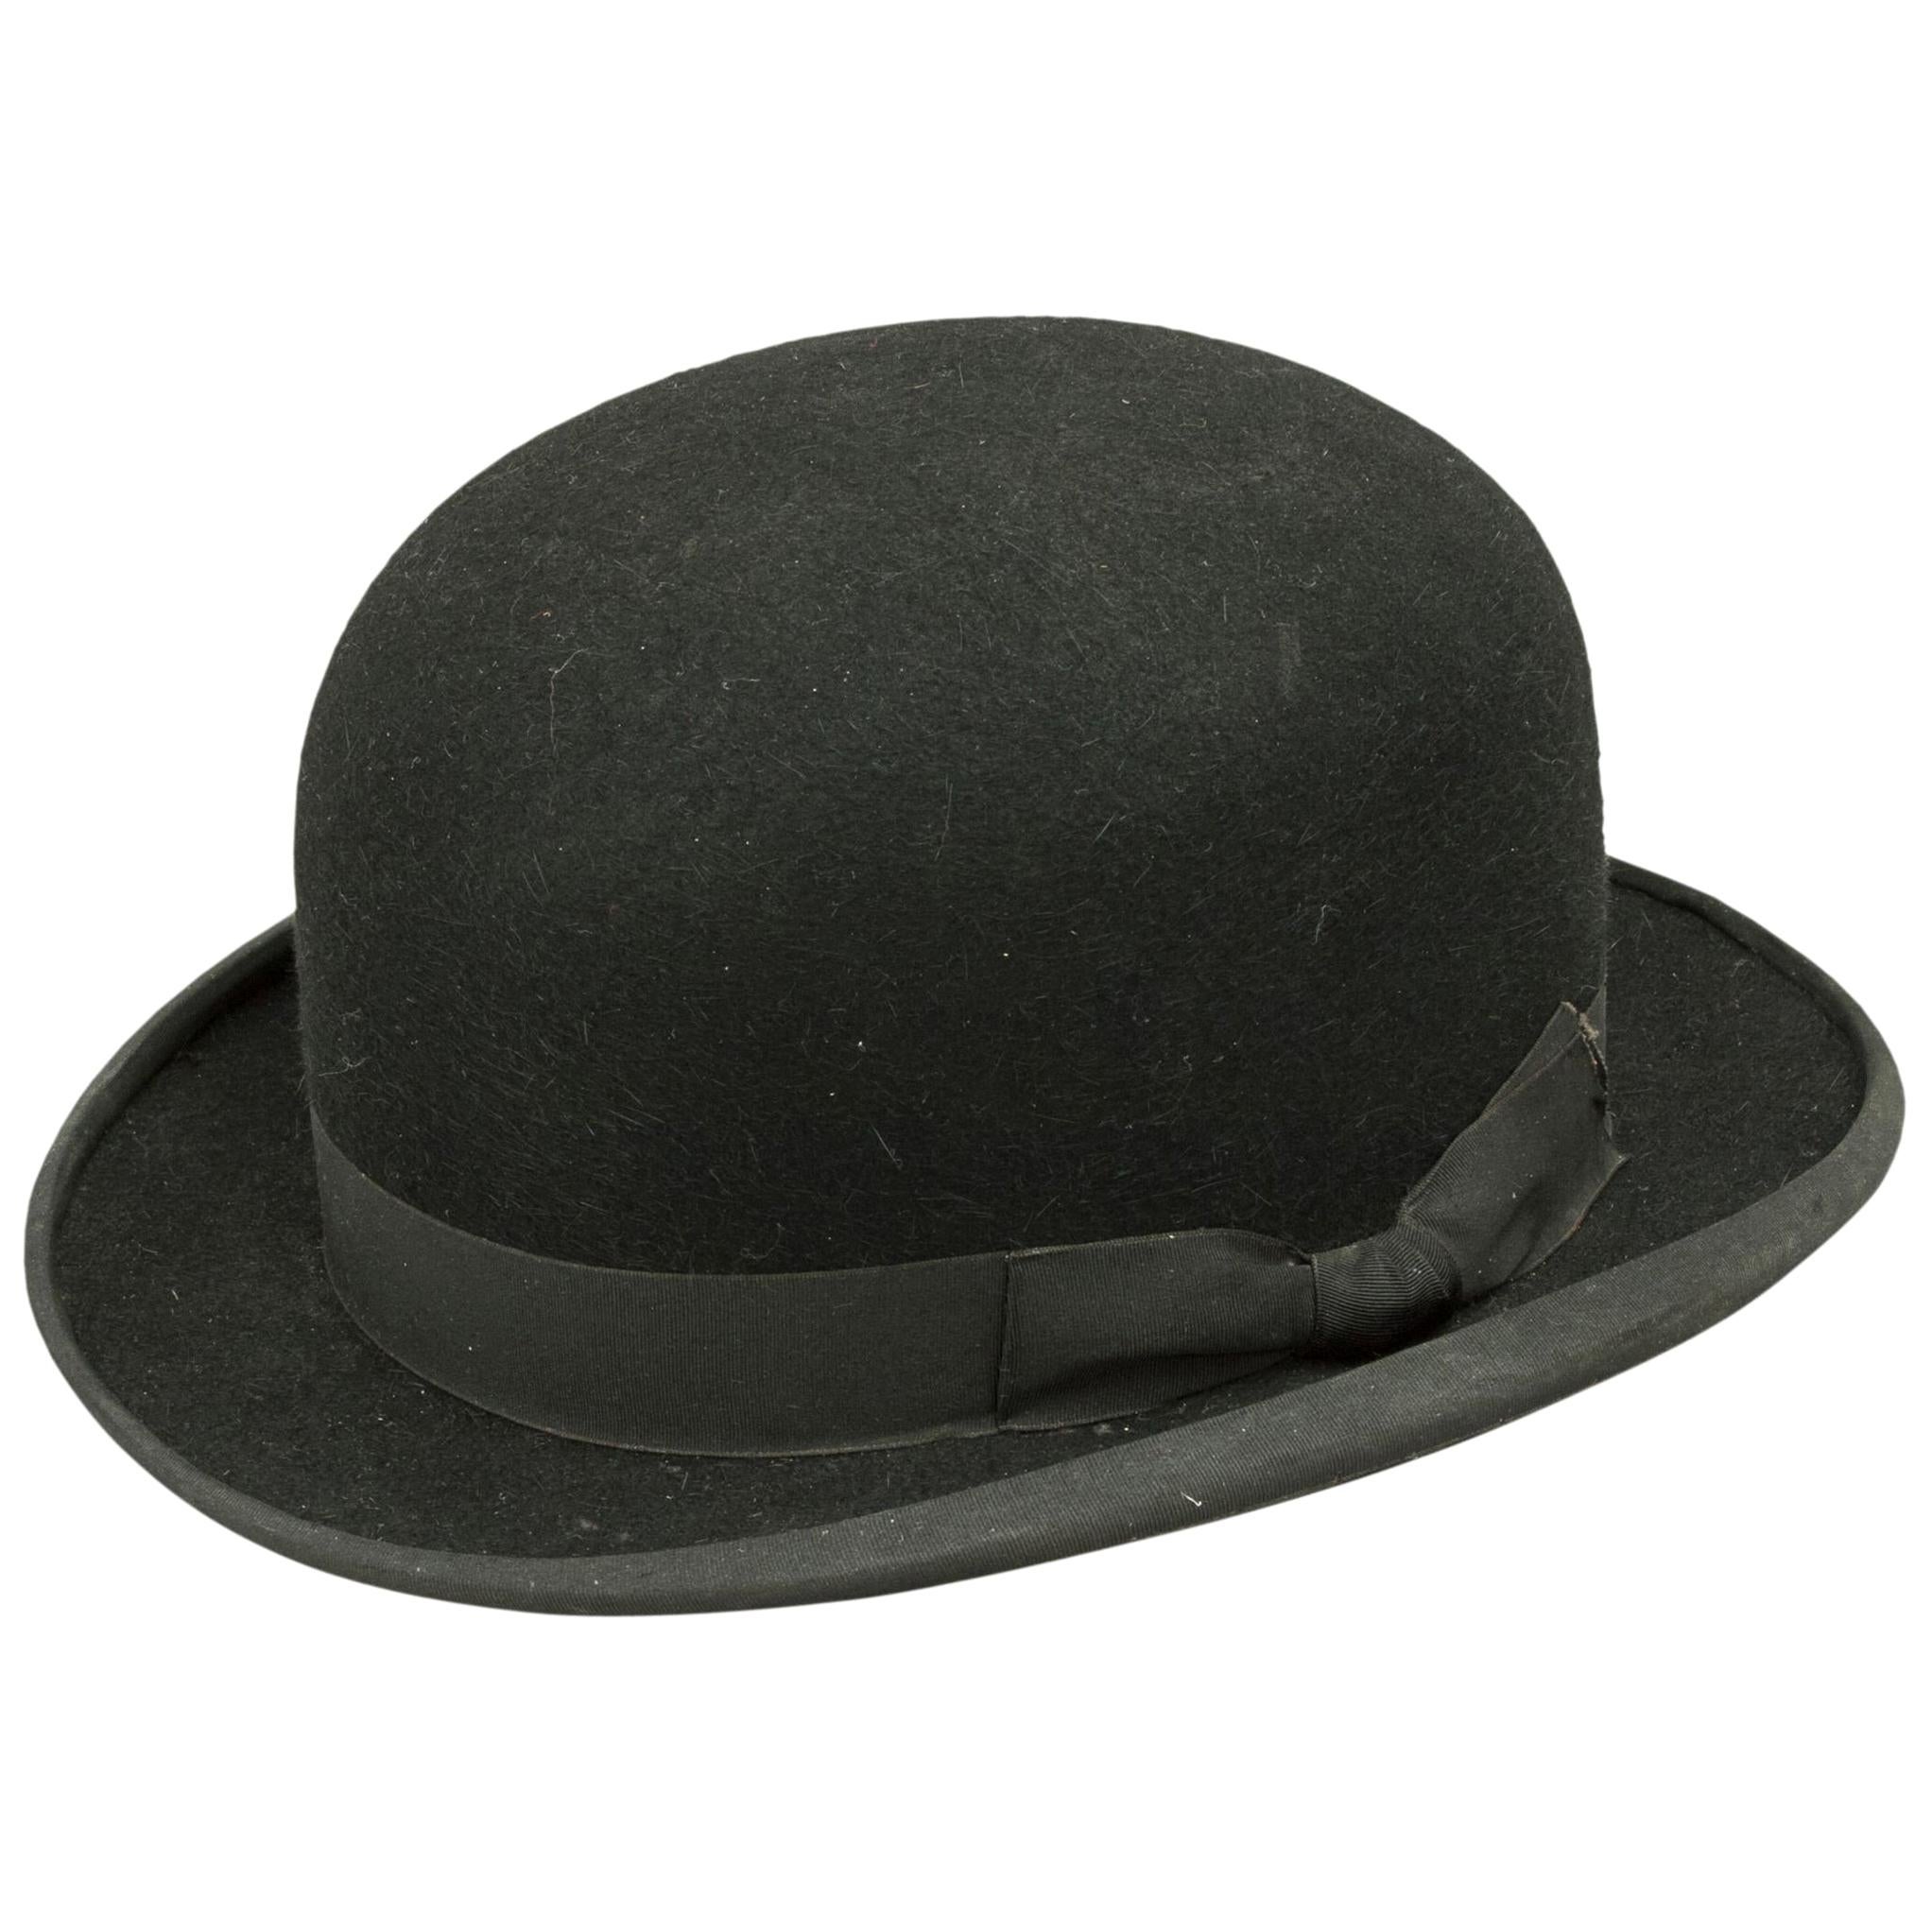 Vintage Black Bowler Riding Hat, Riding Helmet